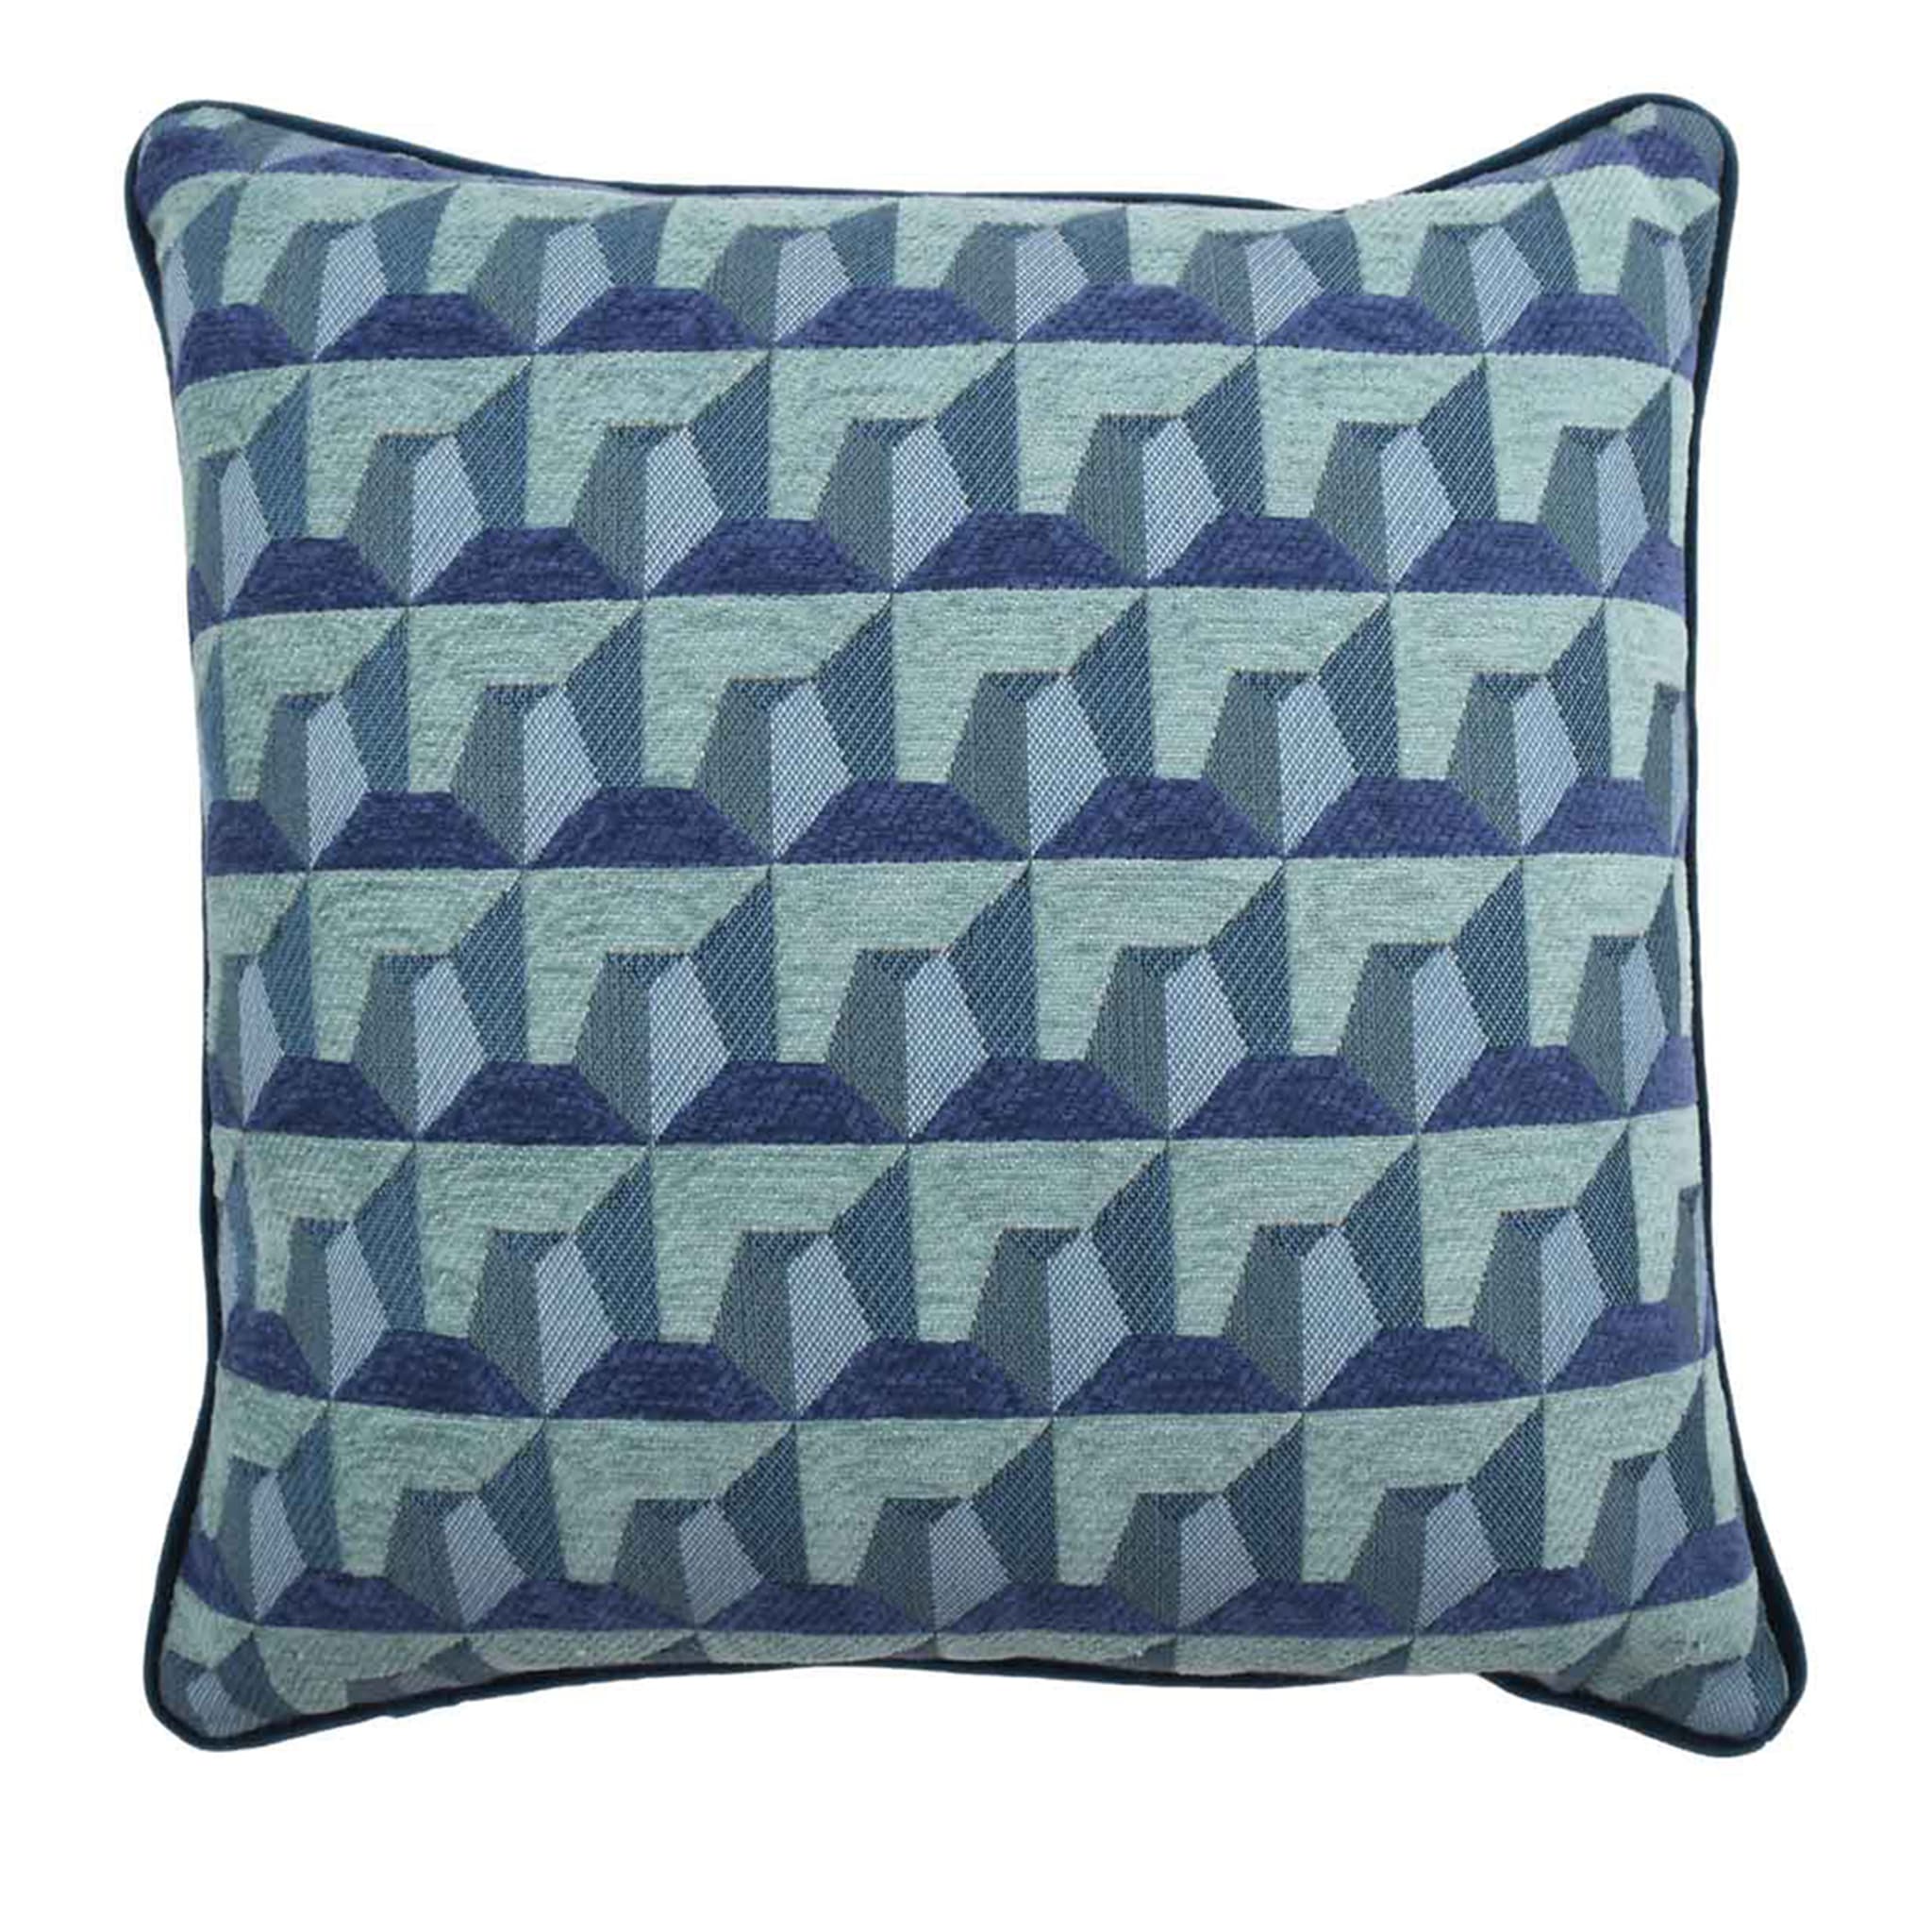 Blue Carrè Cushion in Relief jacquard fabric - Main view